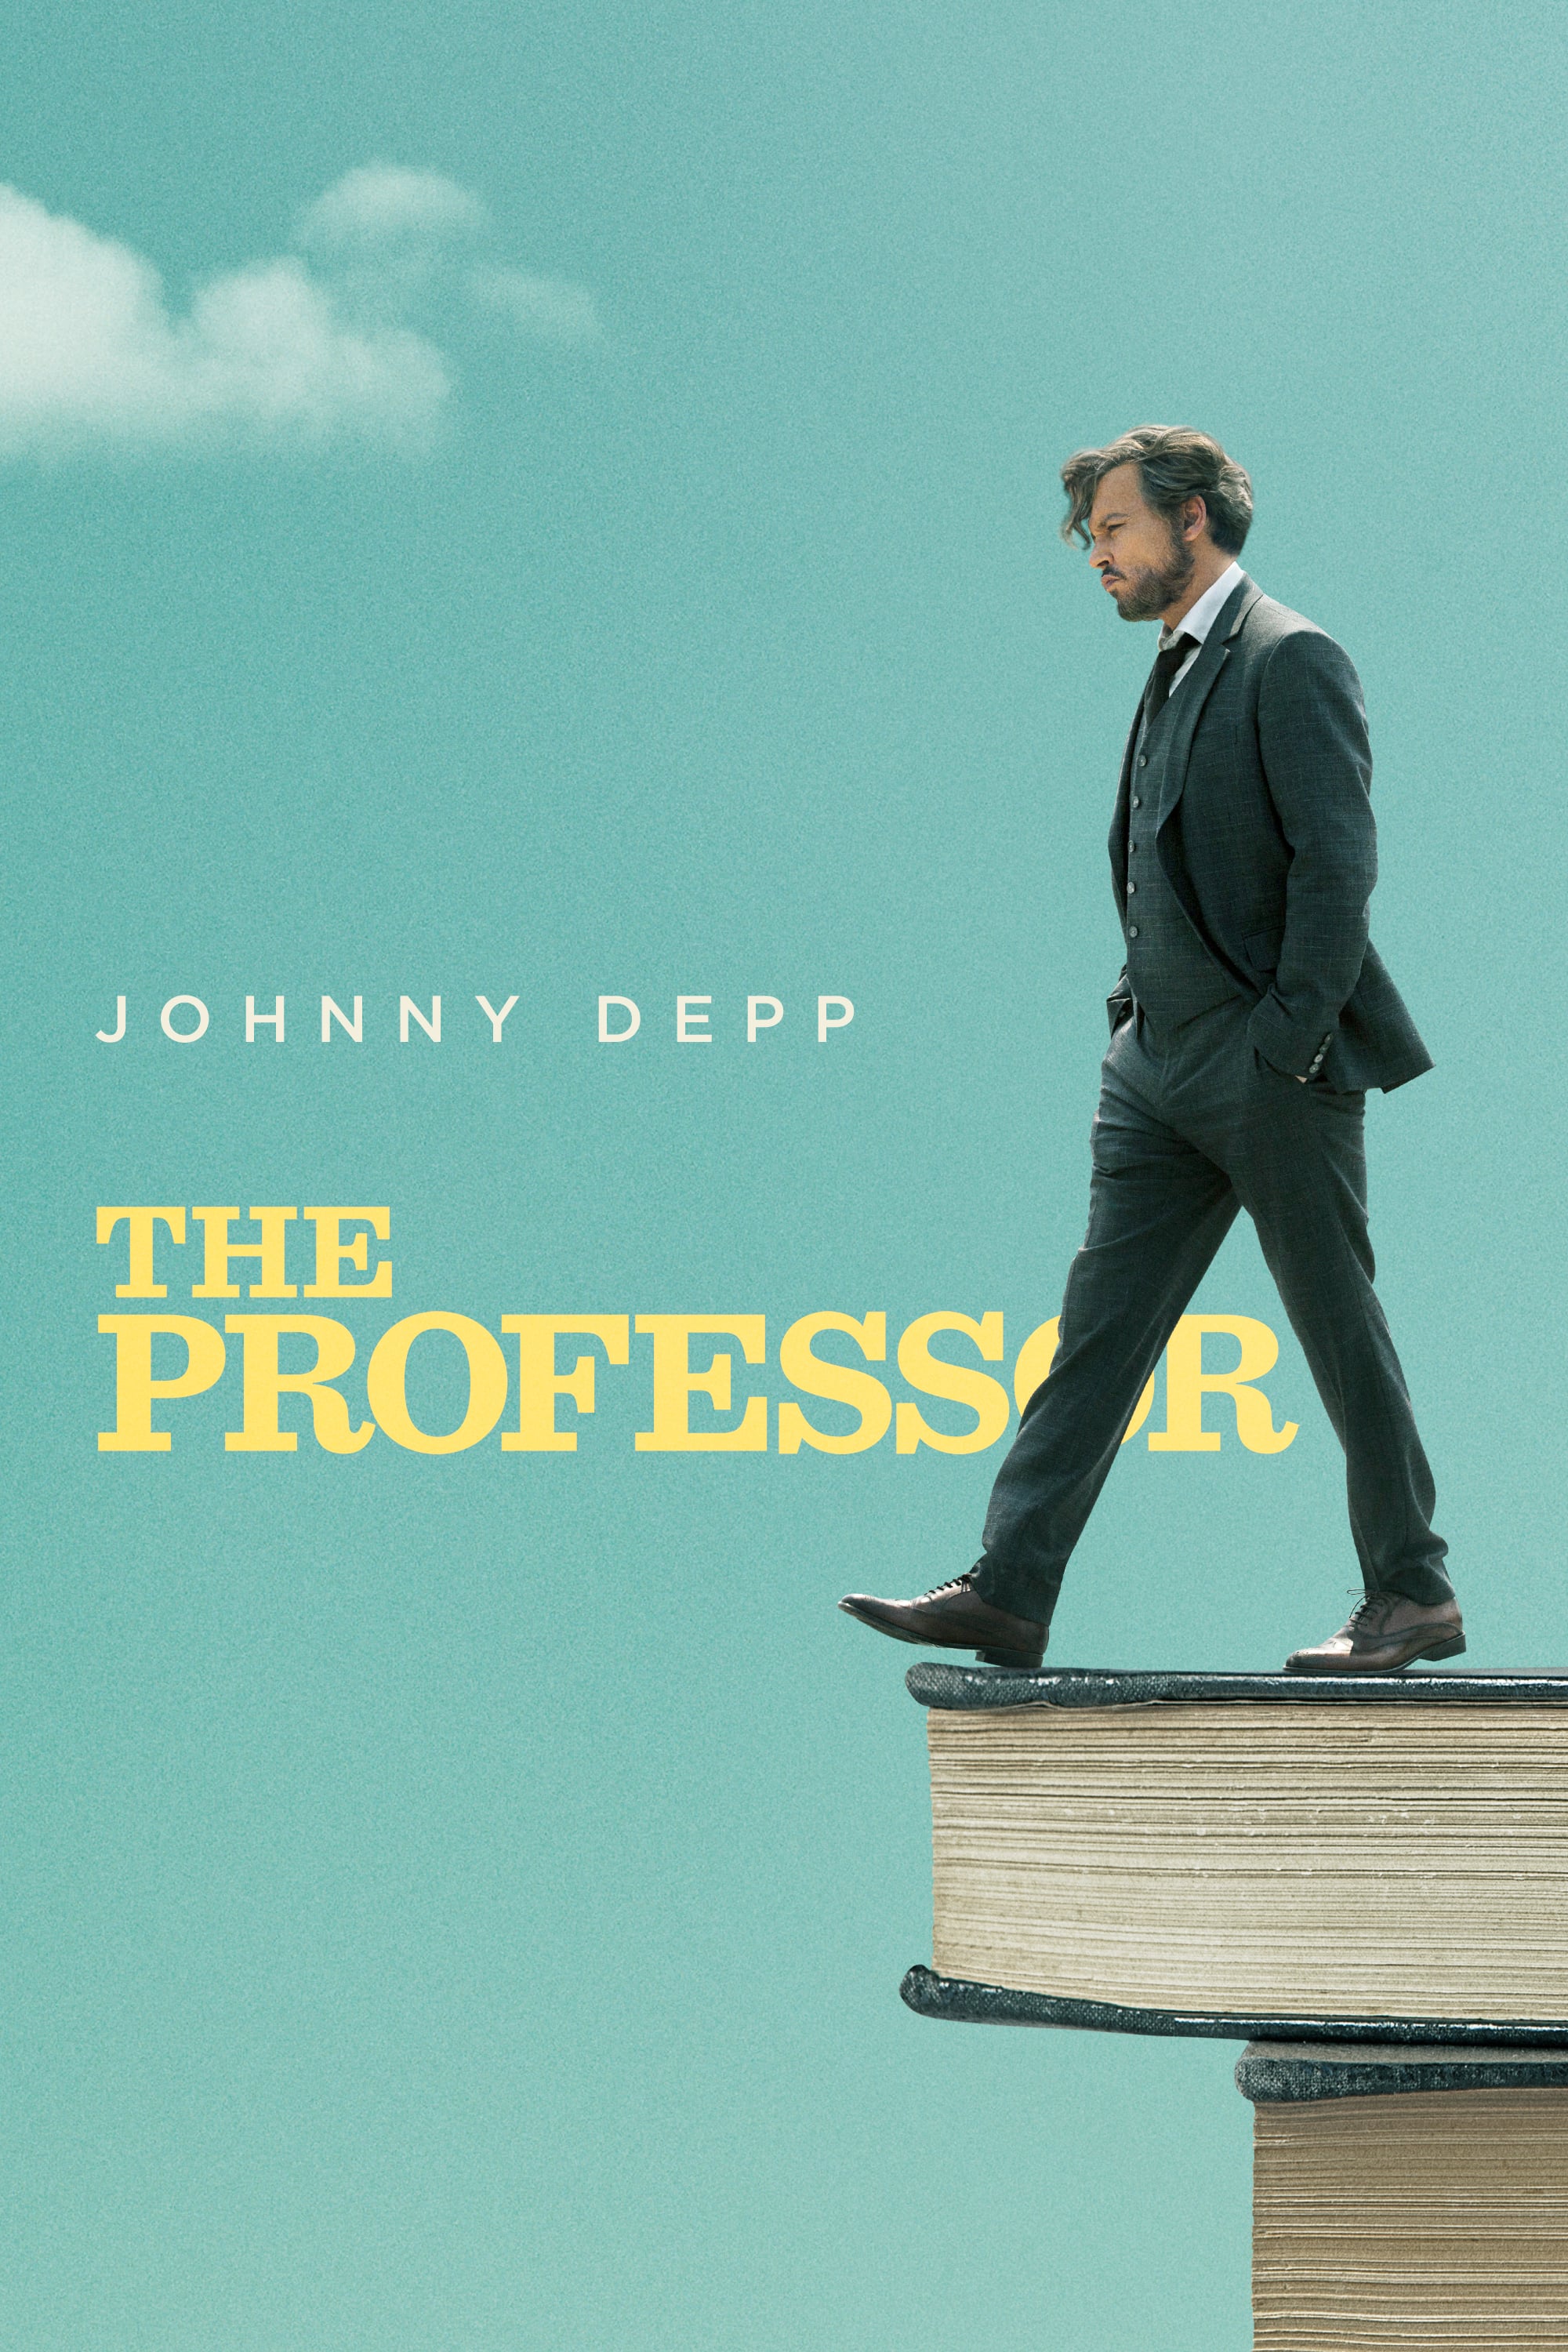 Plakat von "The Professor"